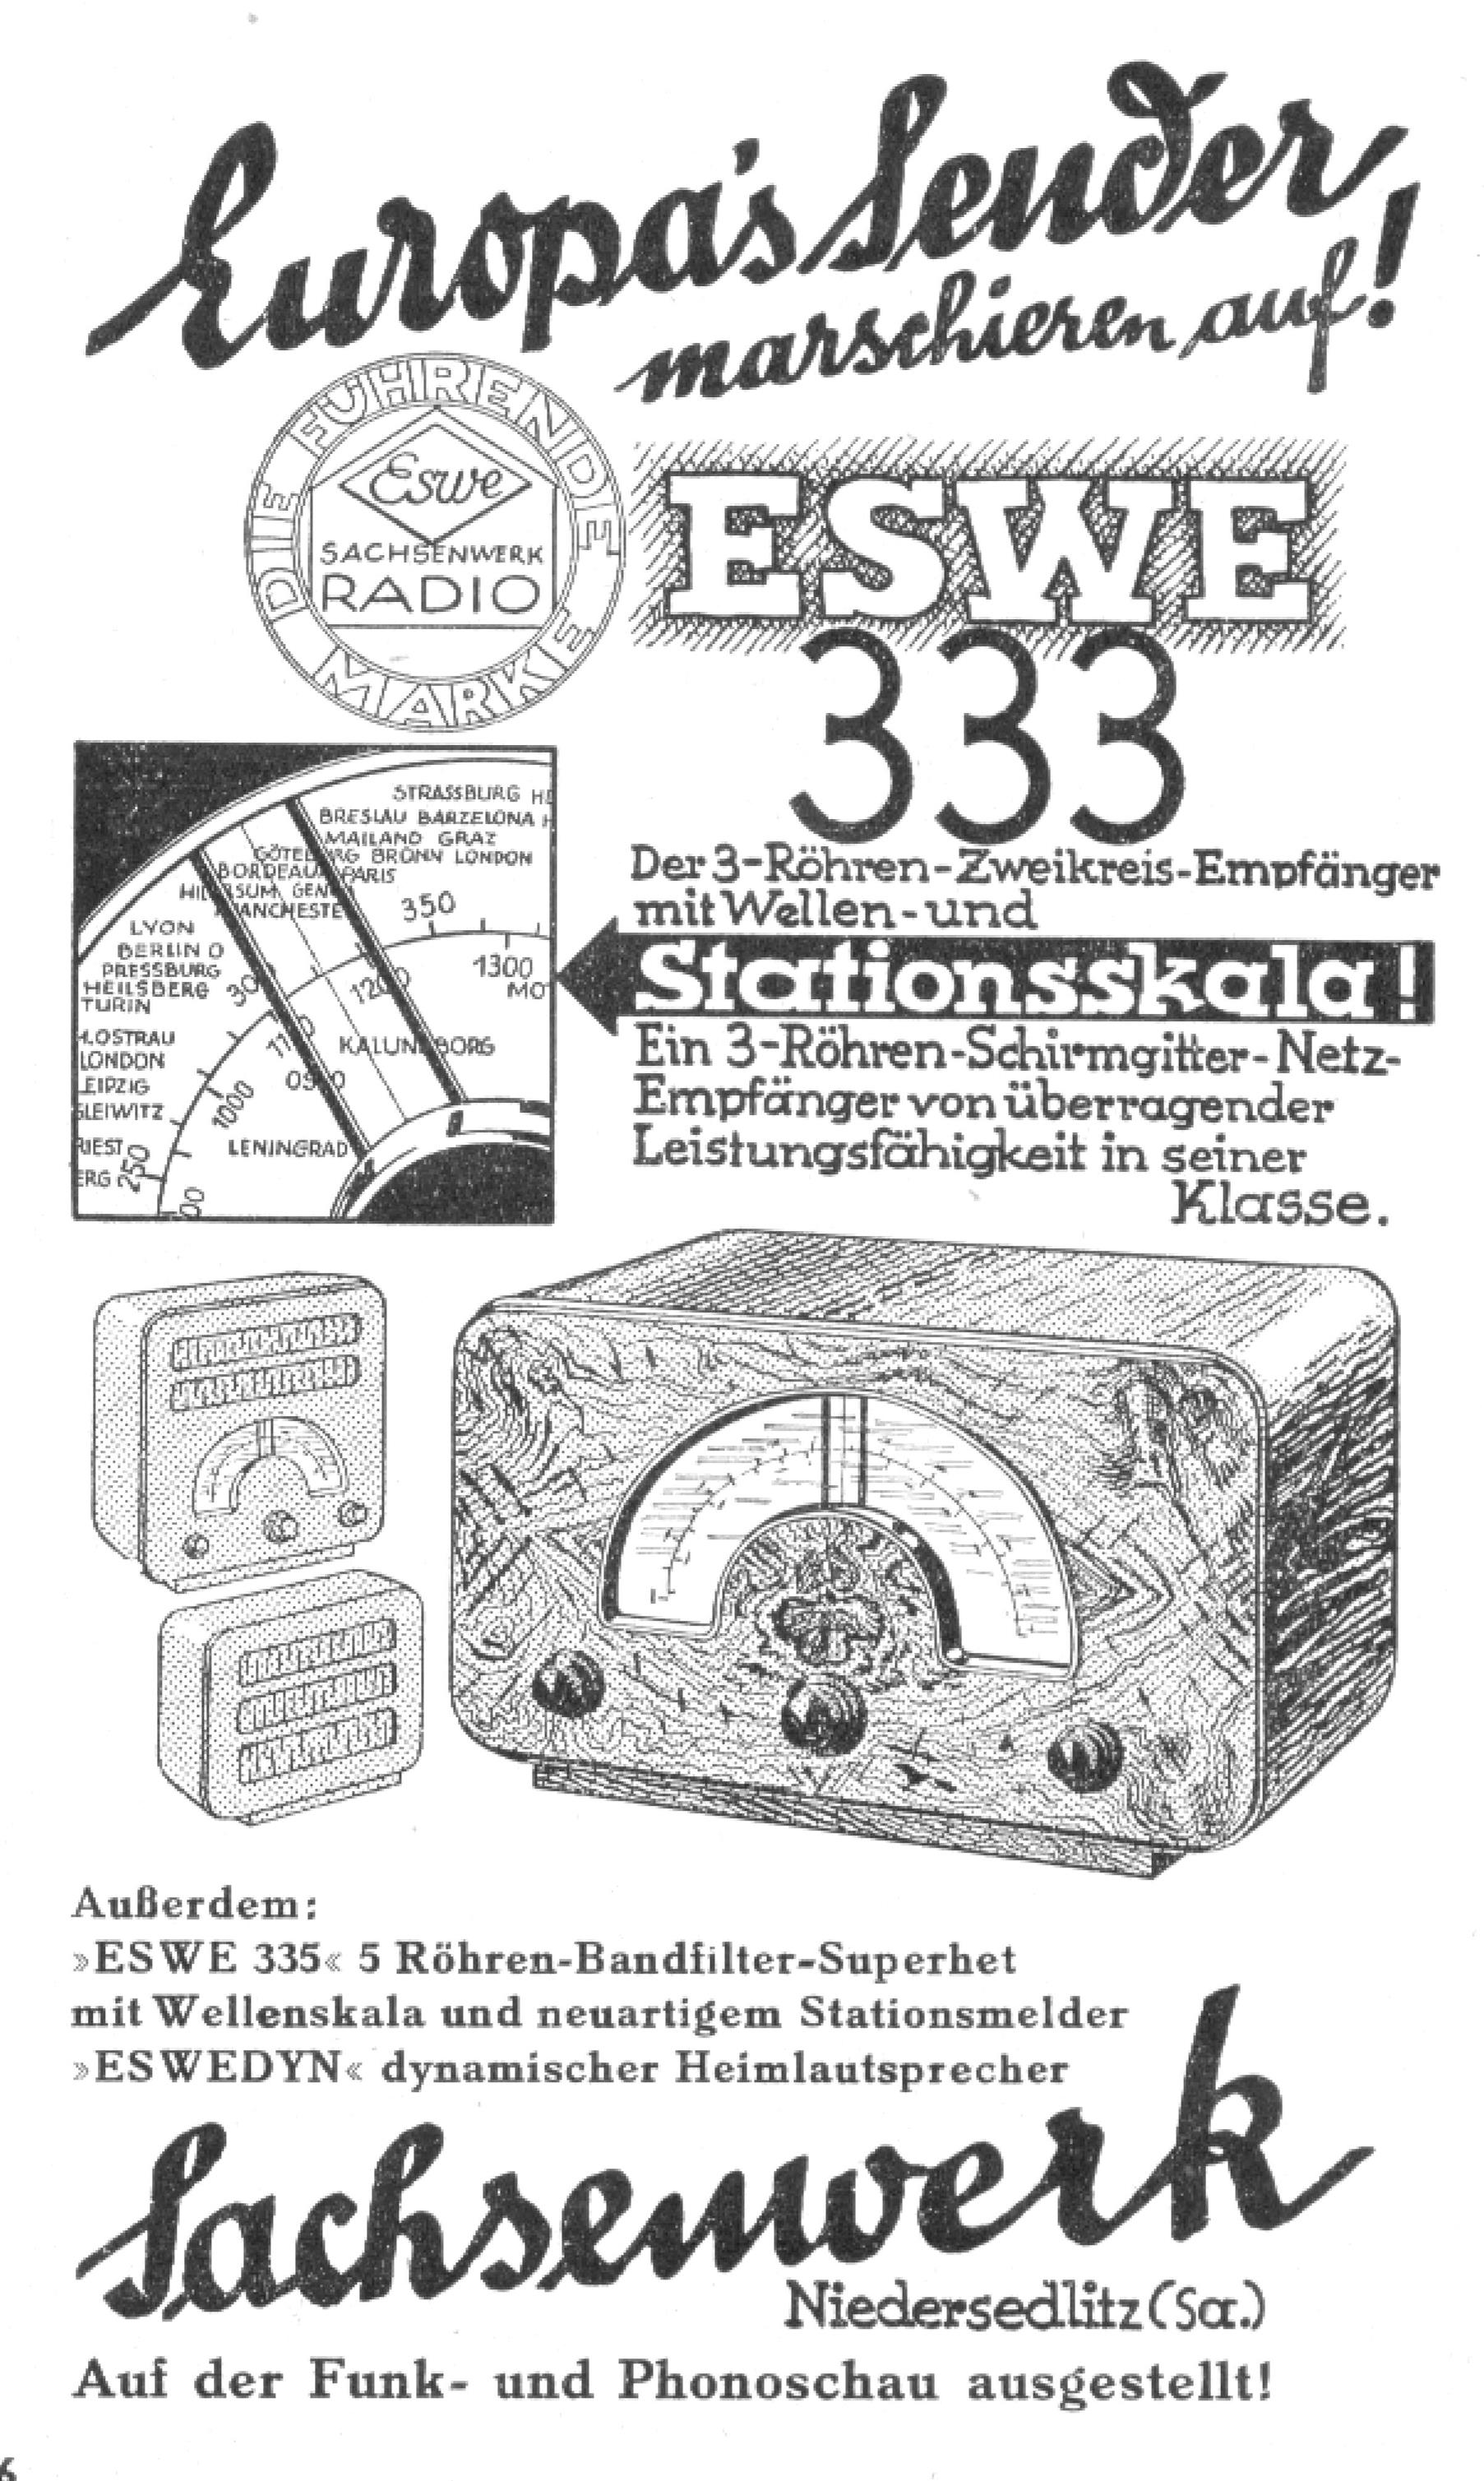 Sachsenwerk 1932 0.jpg